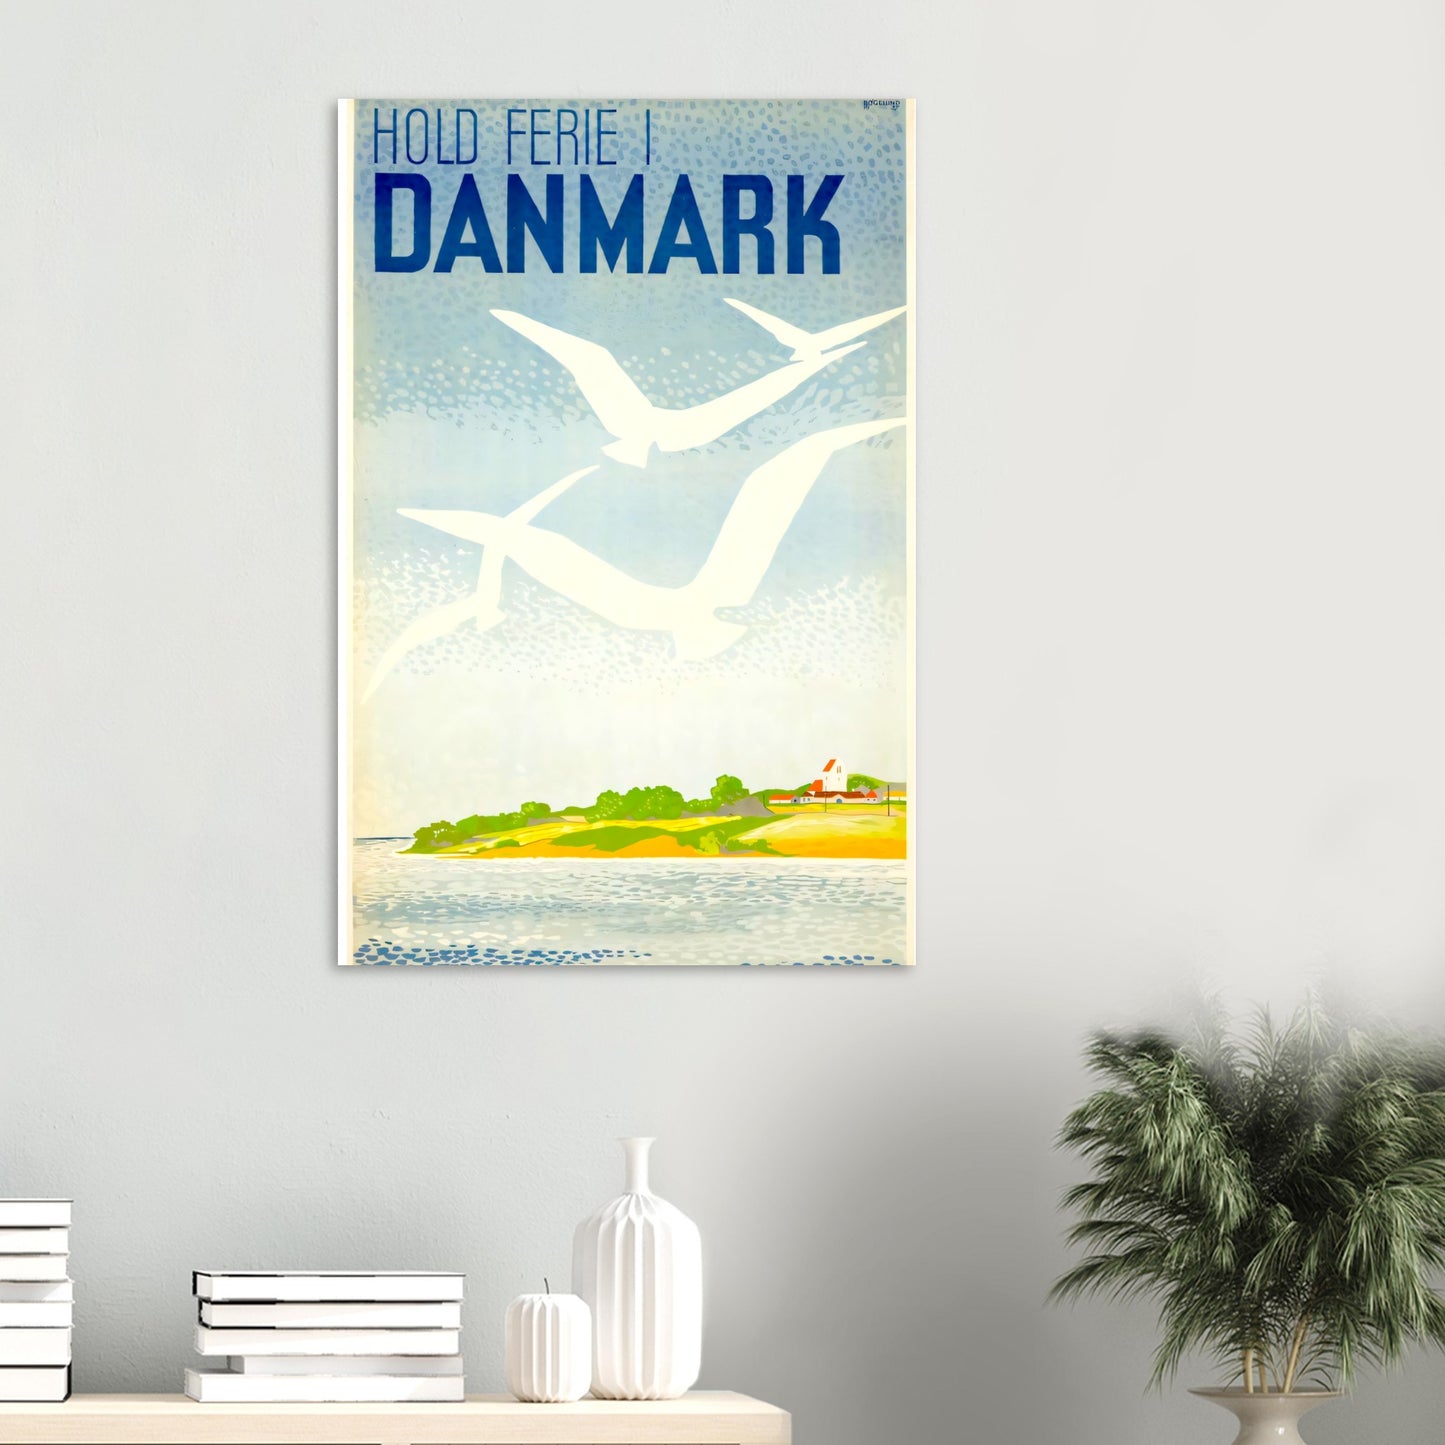 Denmark Vintage Poster Reprint on Premium matte paper - Posterify